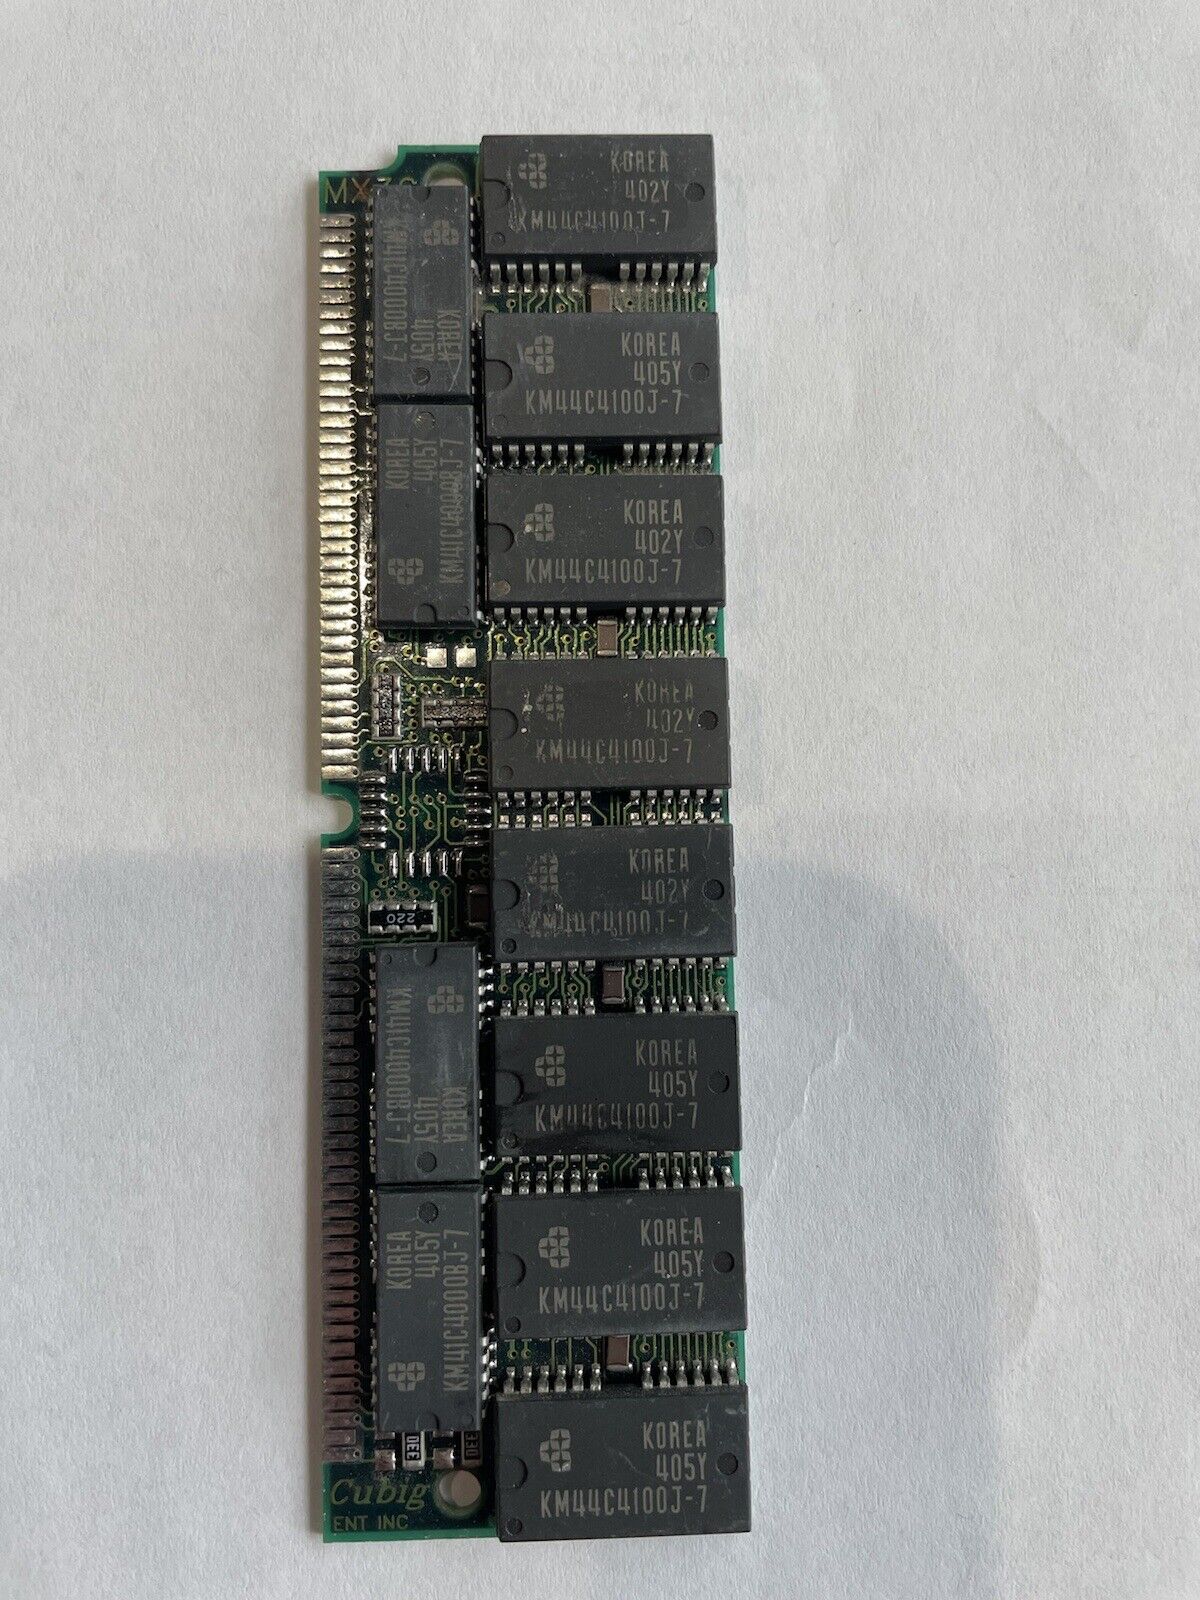 Rare 1993 Cubig 30-Pin Fast Page Simm Parity Memory RAM 70ns 1Mx9 KM44C100J-7